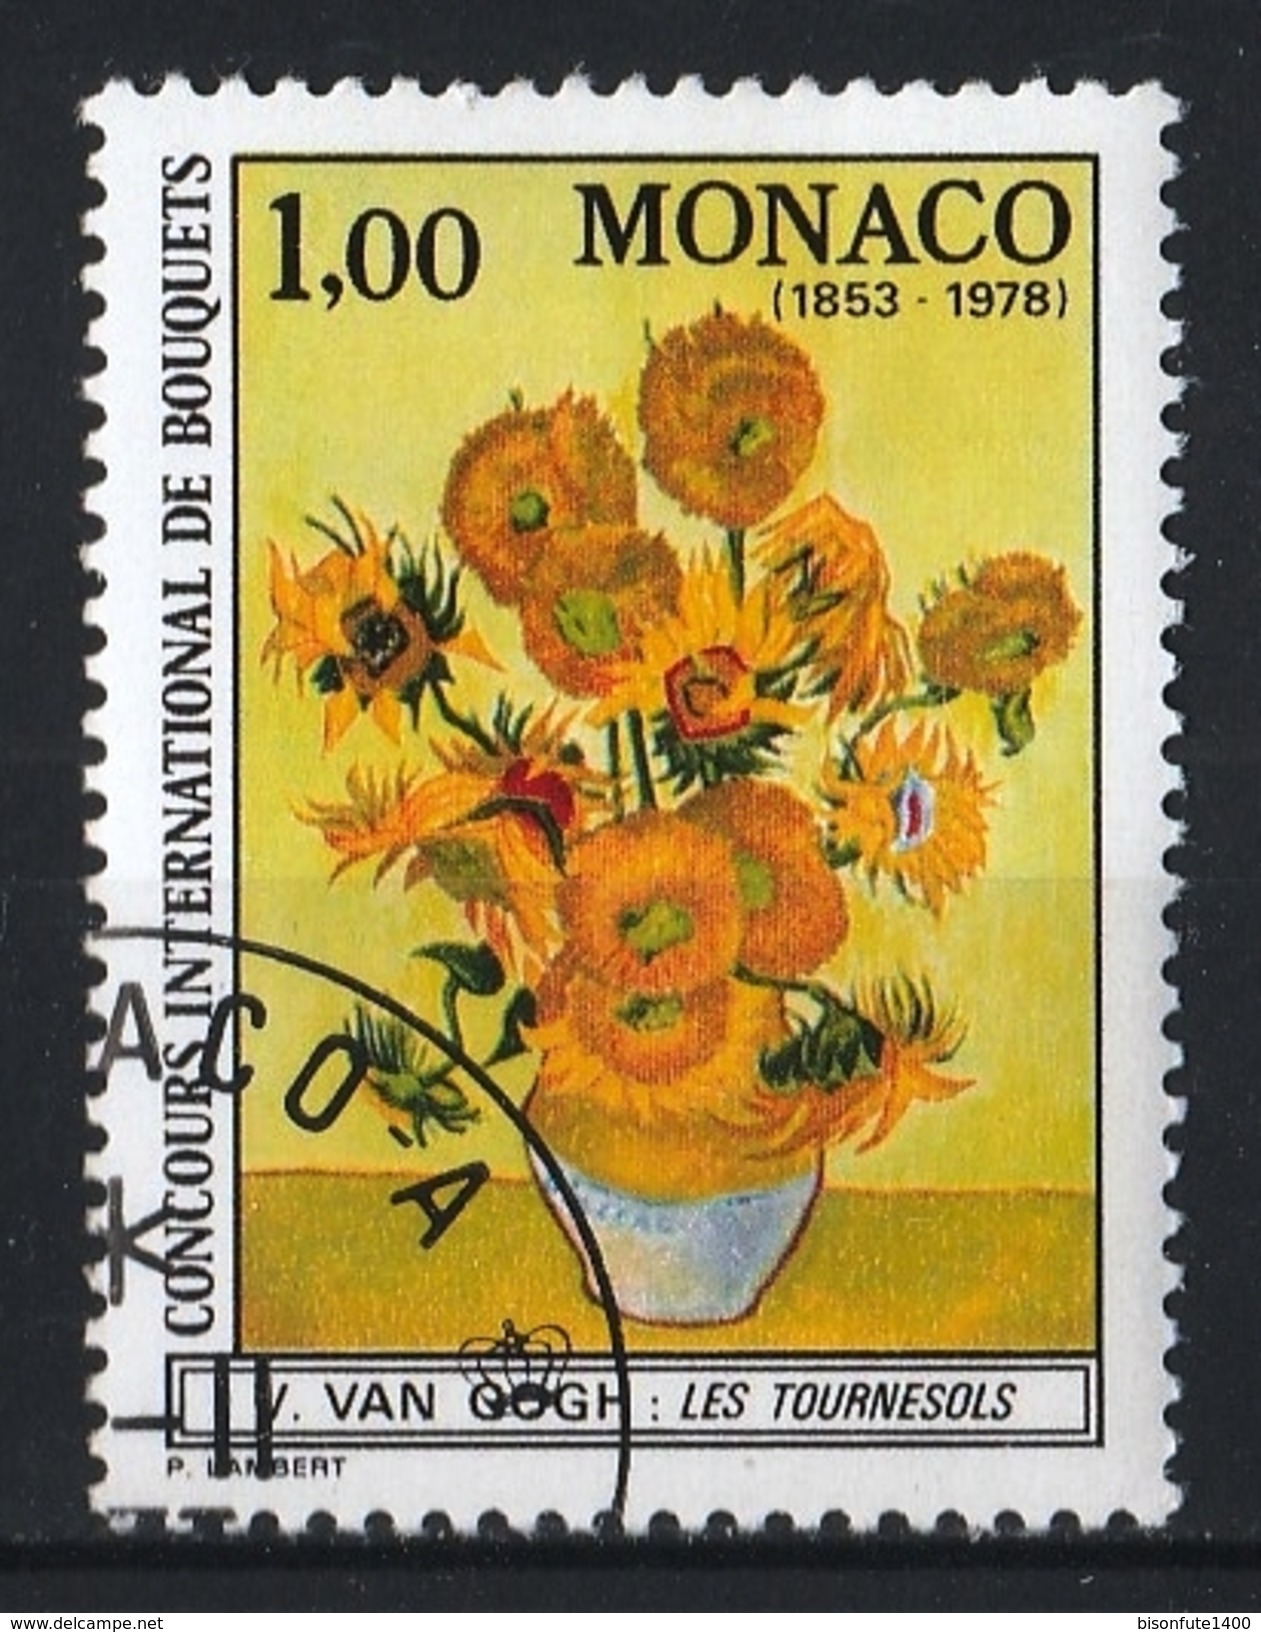 Monaco 1978 : Timbres Yvert & Tellier N° 1161. - Usados